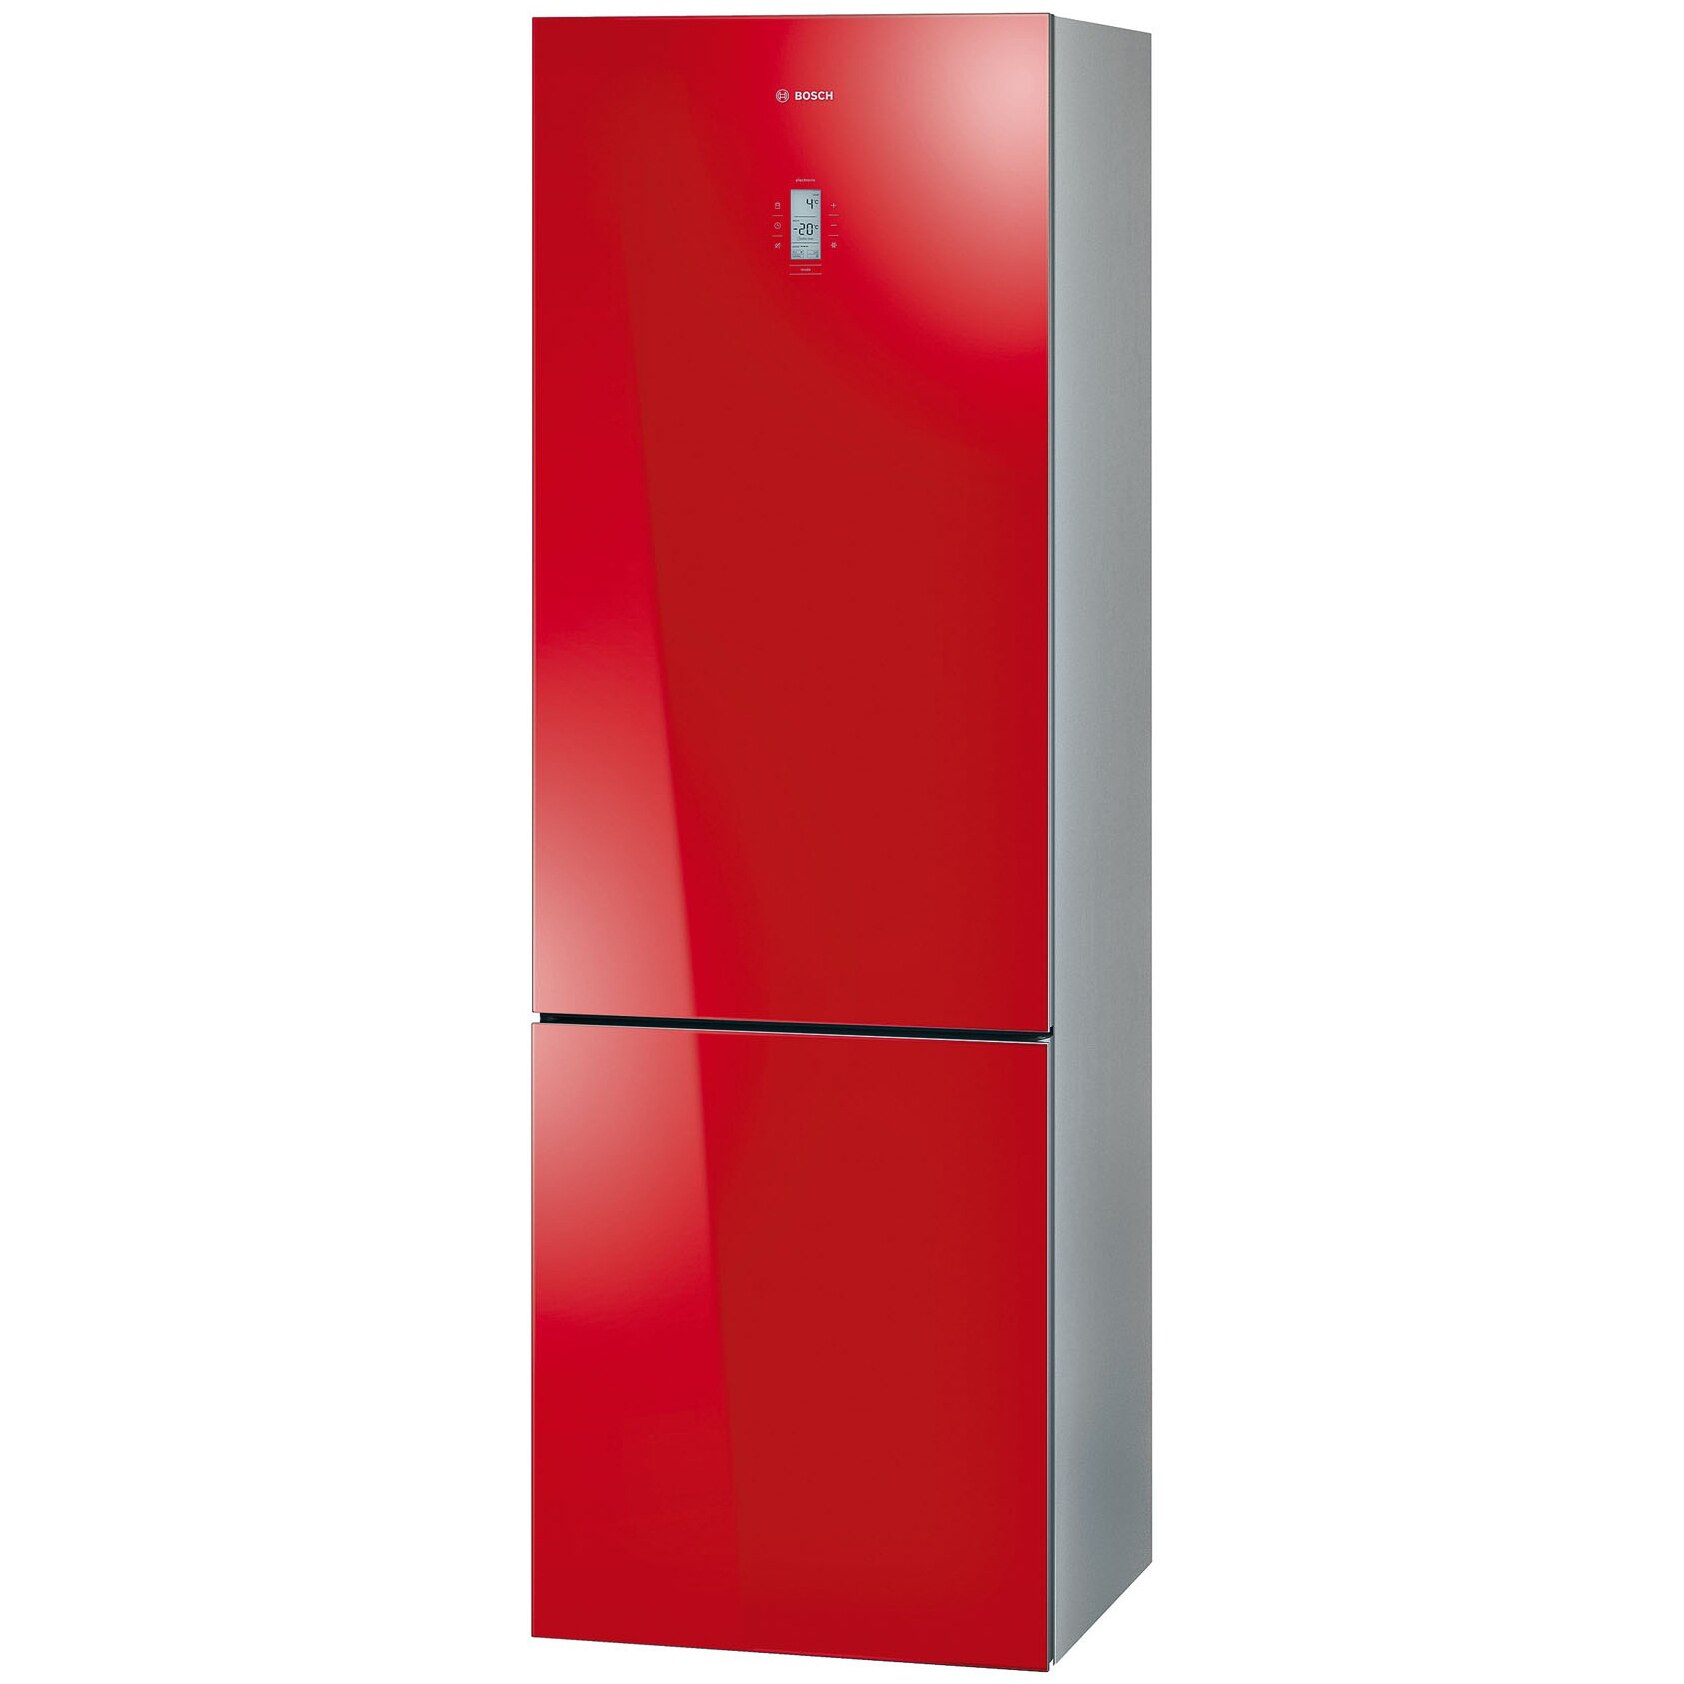 Хладилник Bosch KGN36SR31 с обем от 285 л.